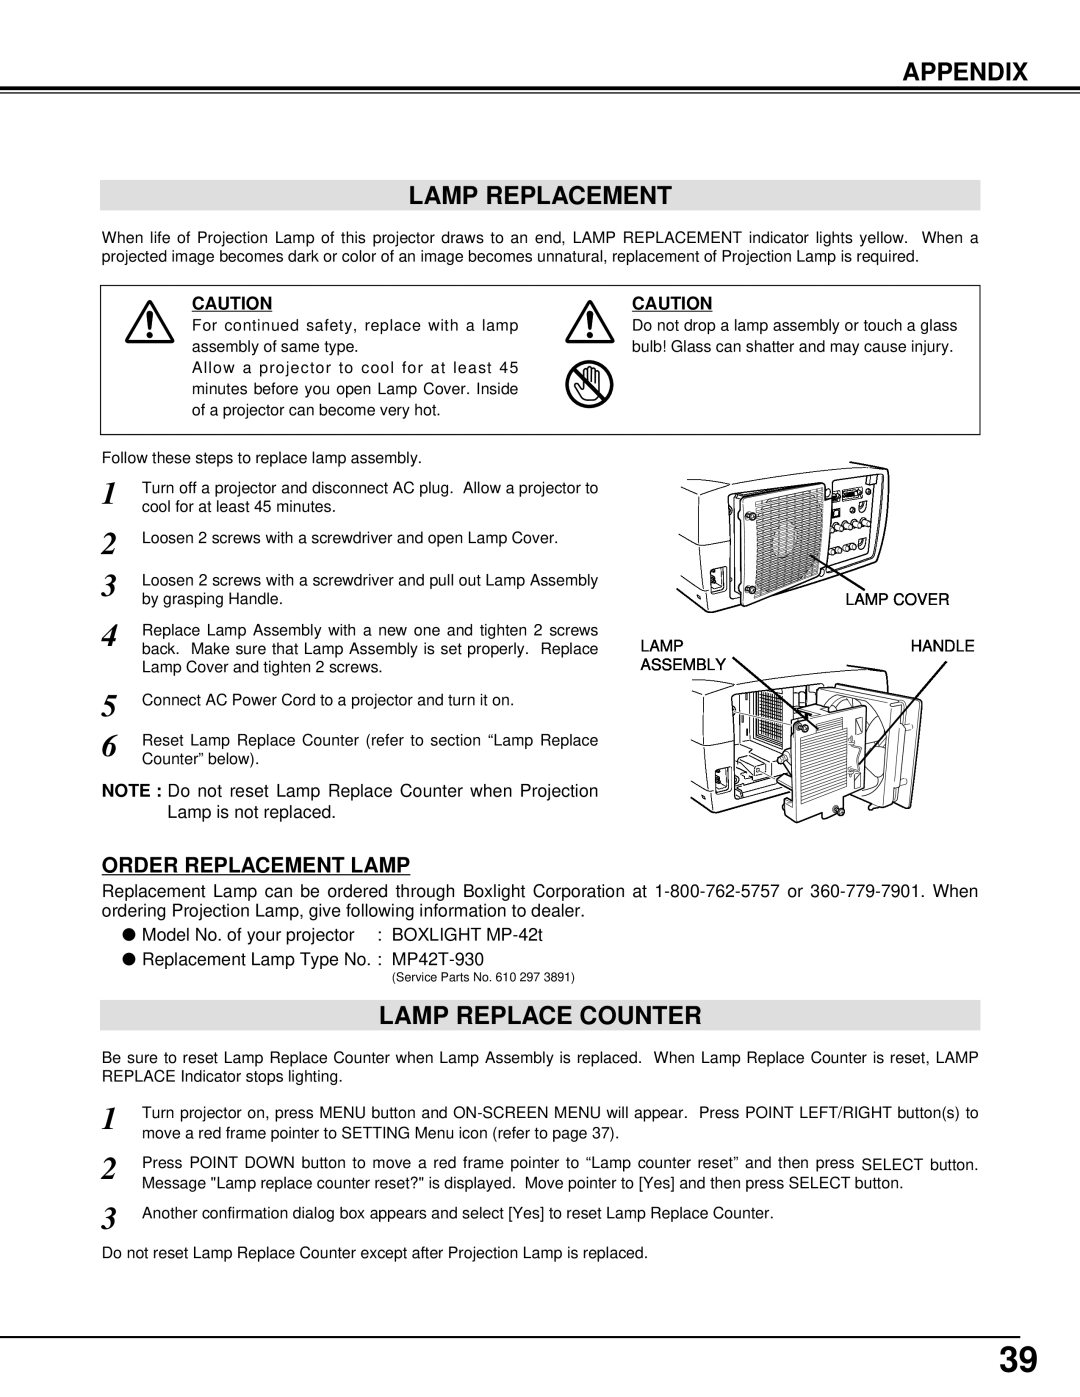 BOXLIGHT MP-42T manual Appendix Lamp Replacement, Lamp Replace Counter, Order Replacement Lamp 